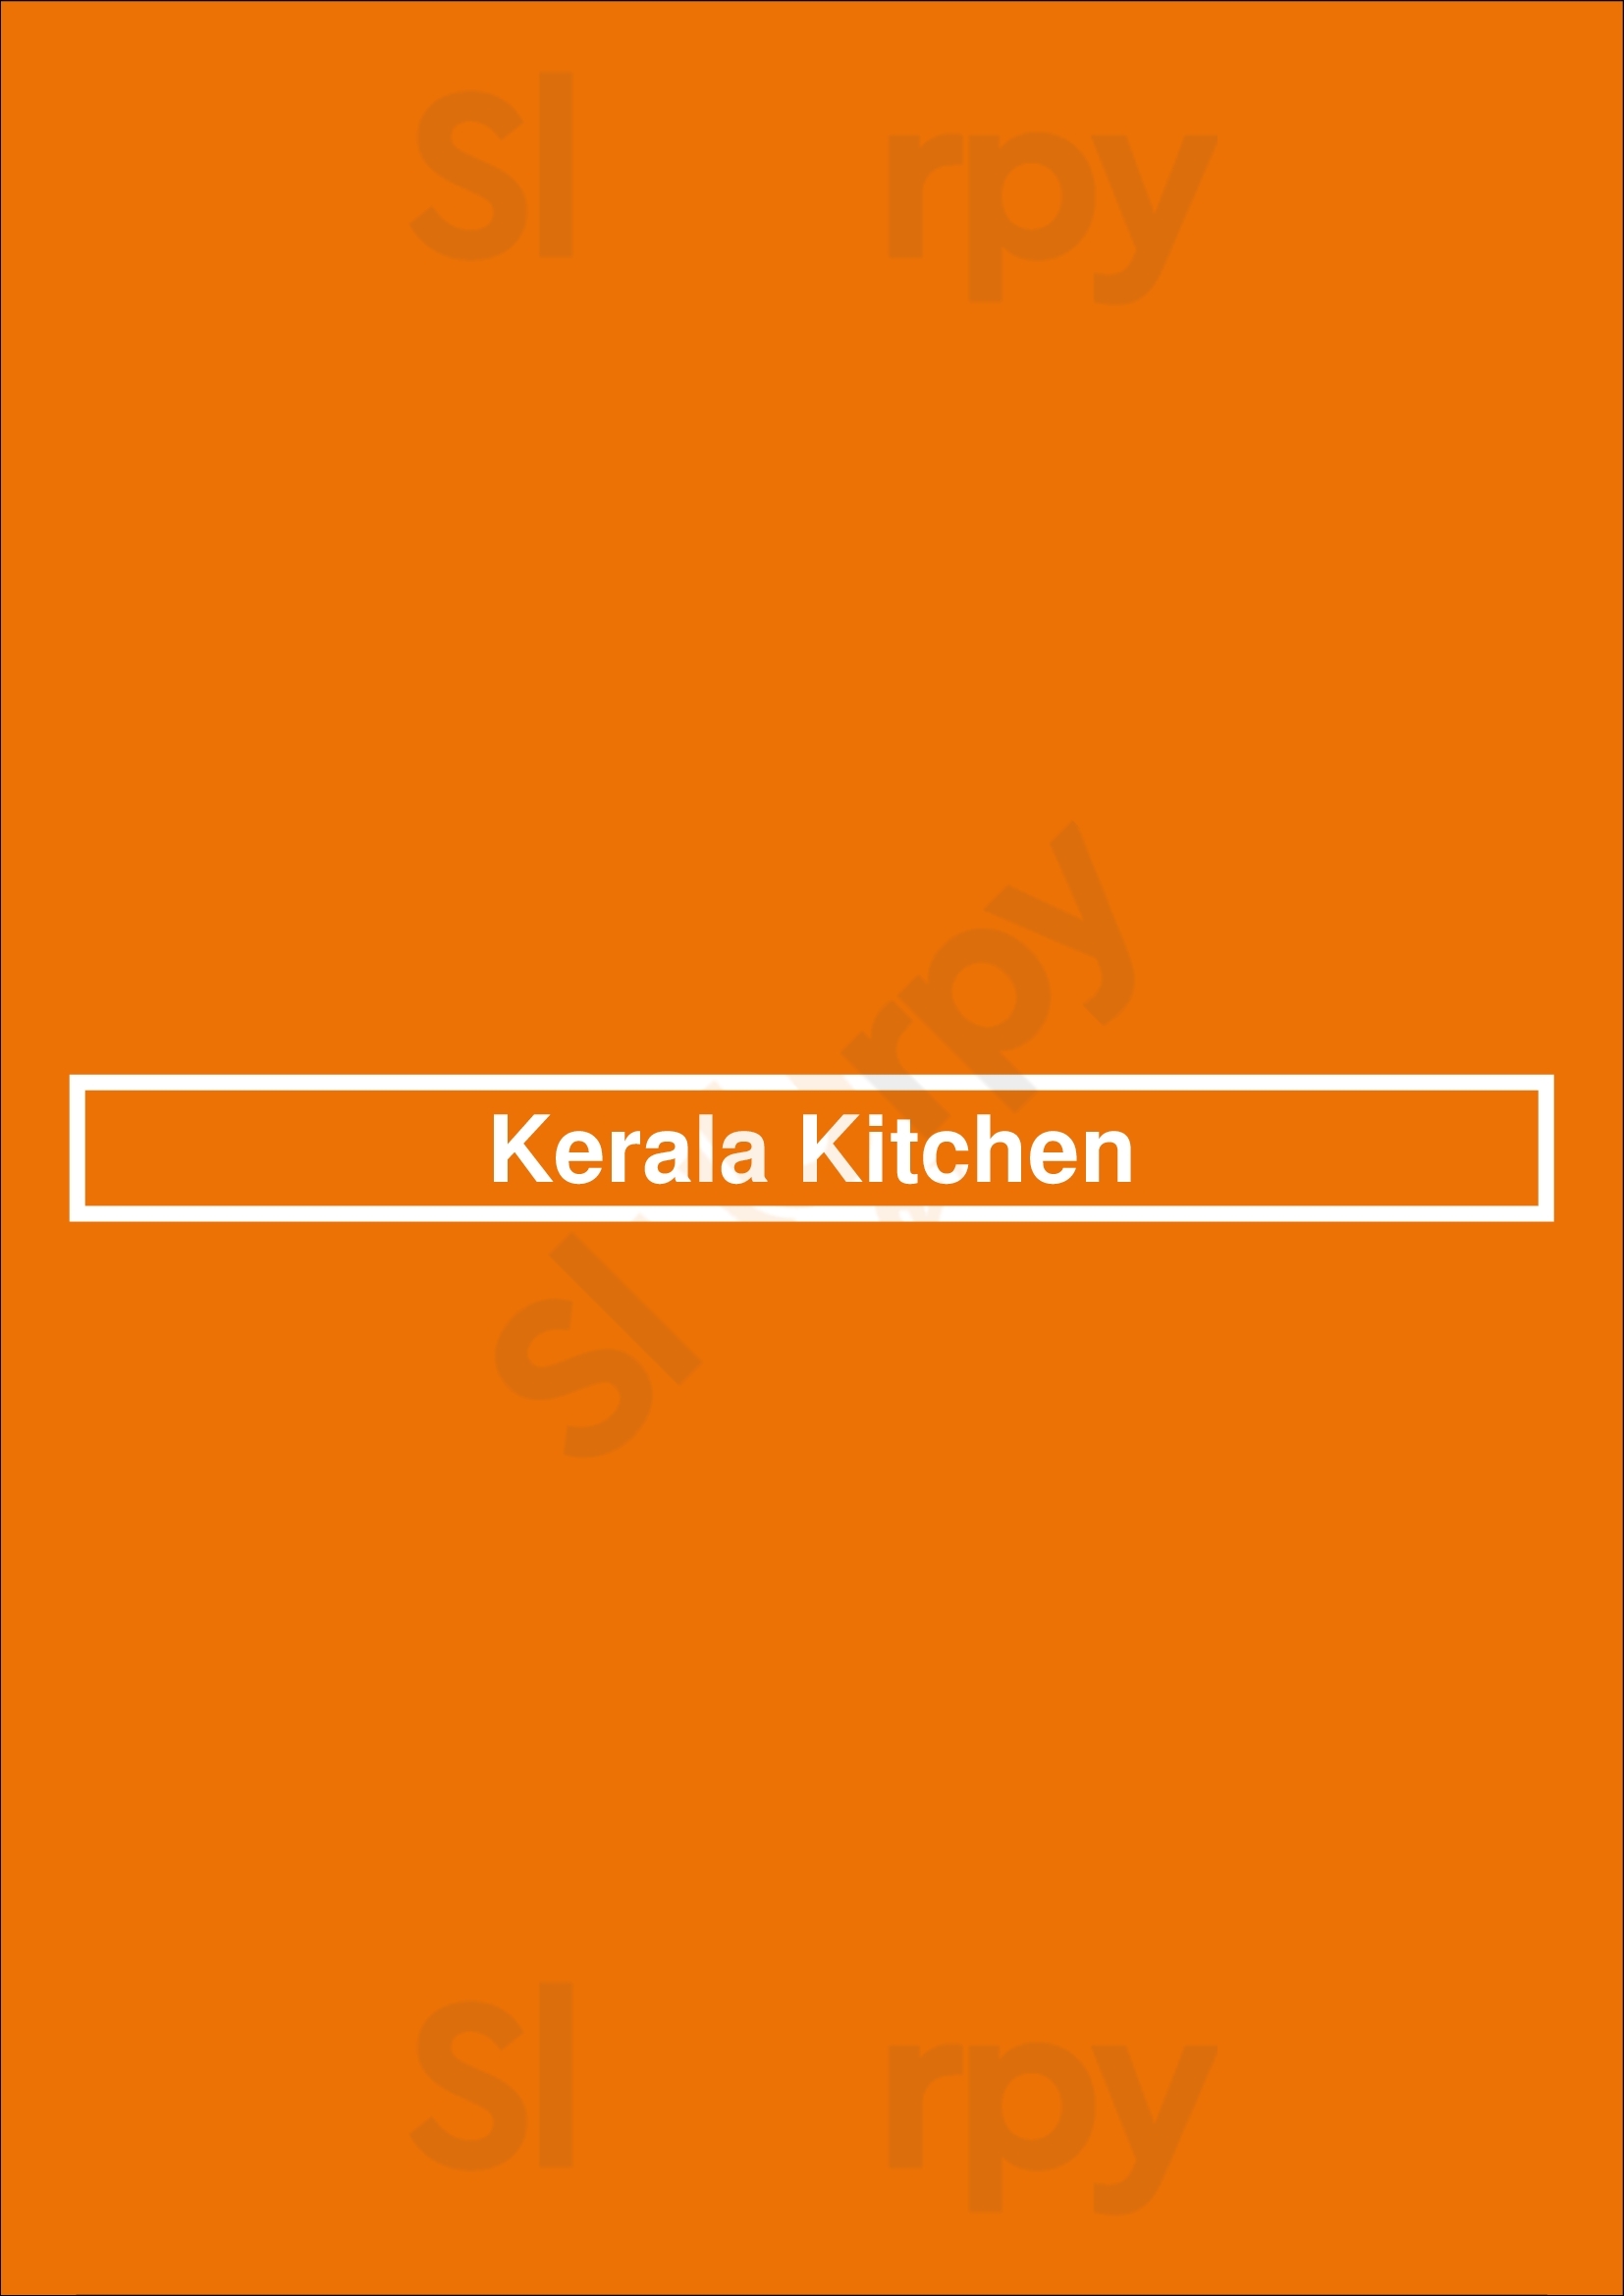 Kerala Kitchen Surrey Menu - 1